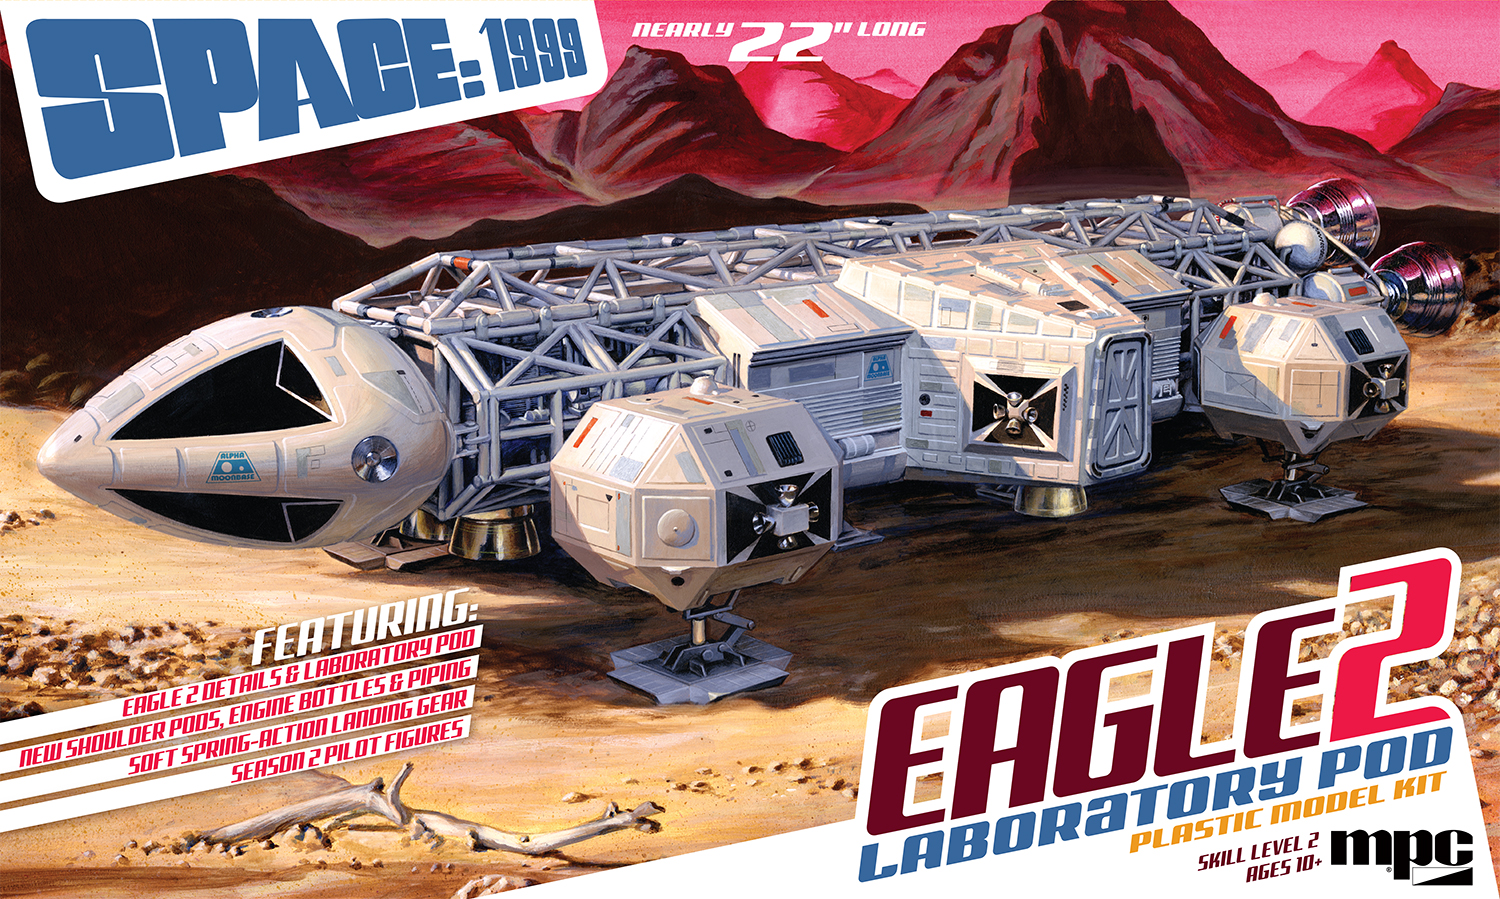 Space 1999 Eagle II w/Lab Pod